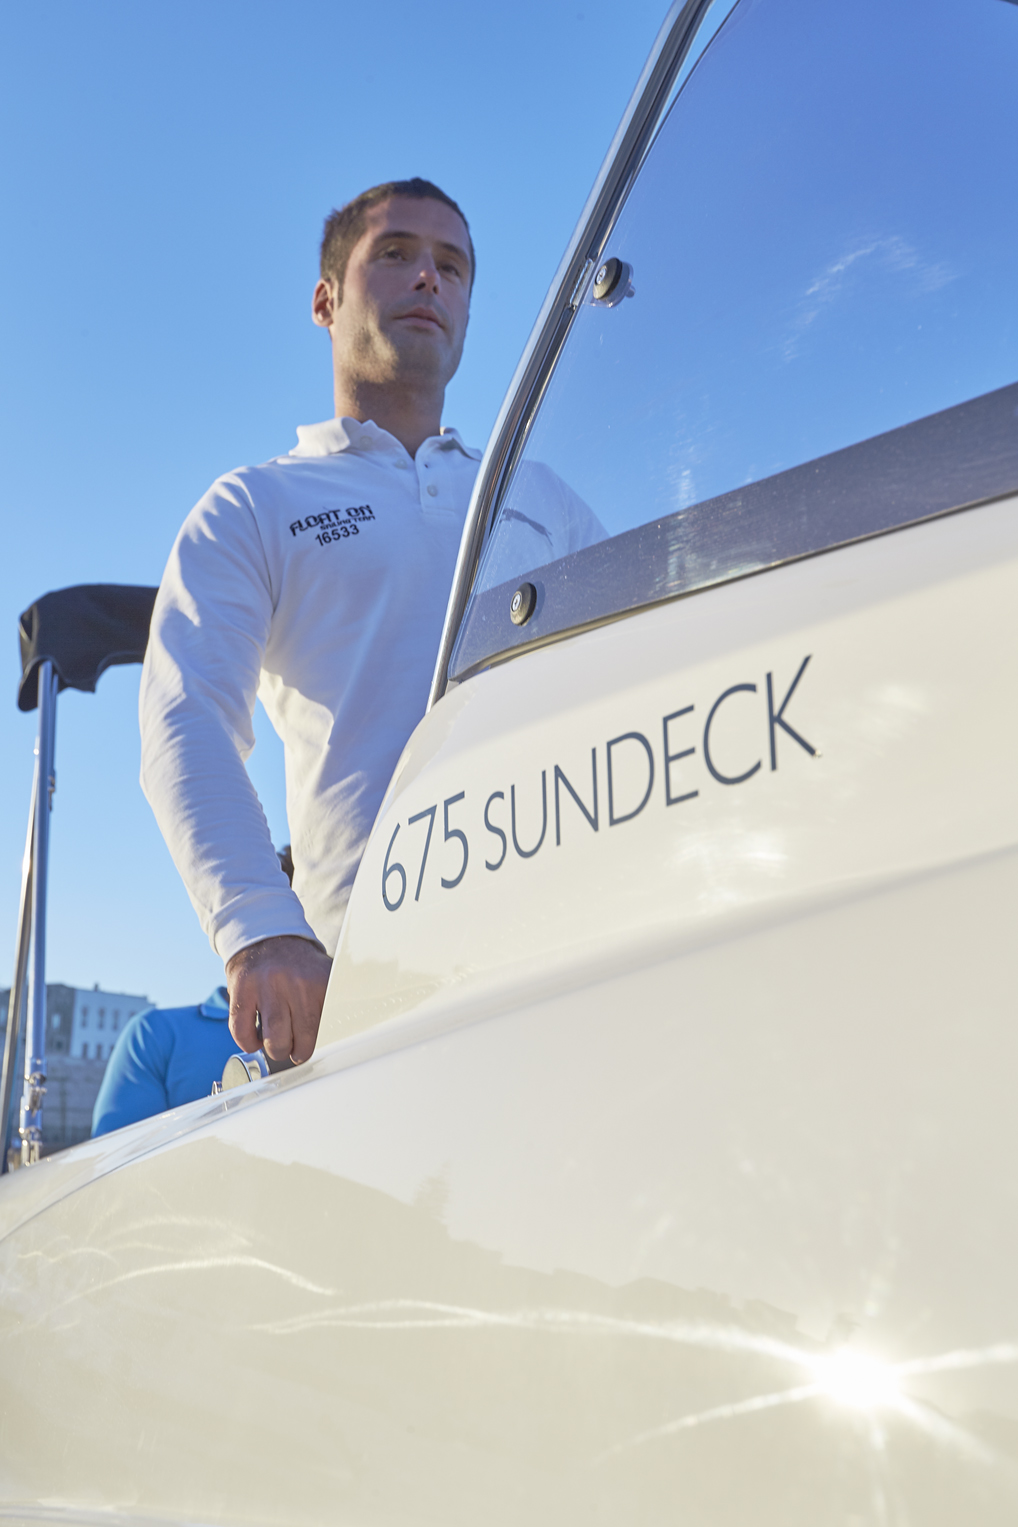 Quicksilver-Boats-Activ-675-sundeck (88)